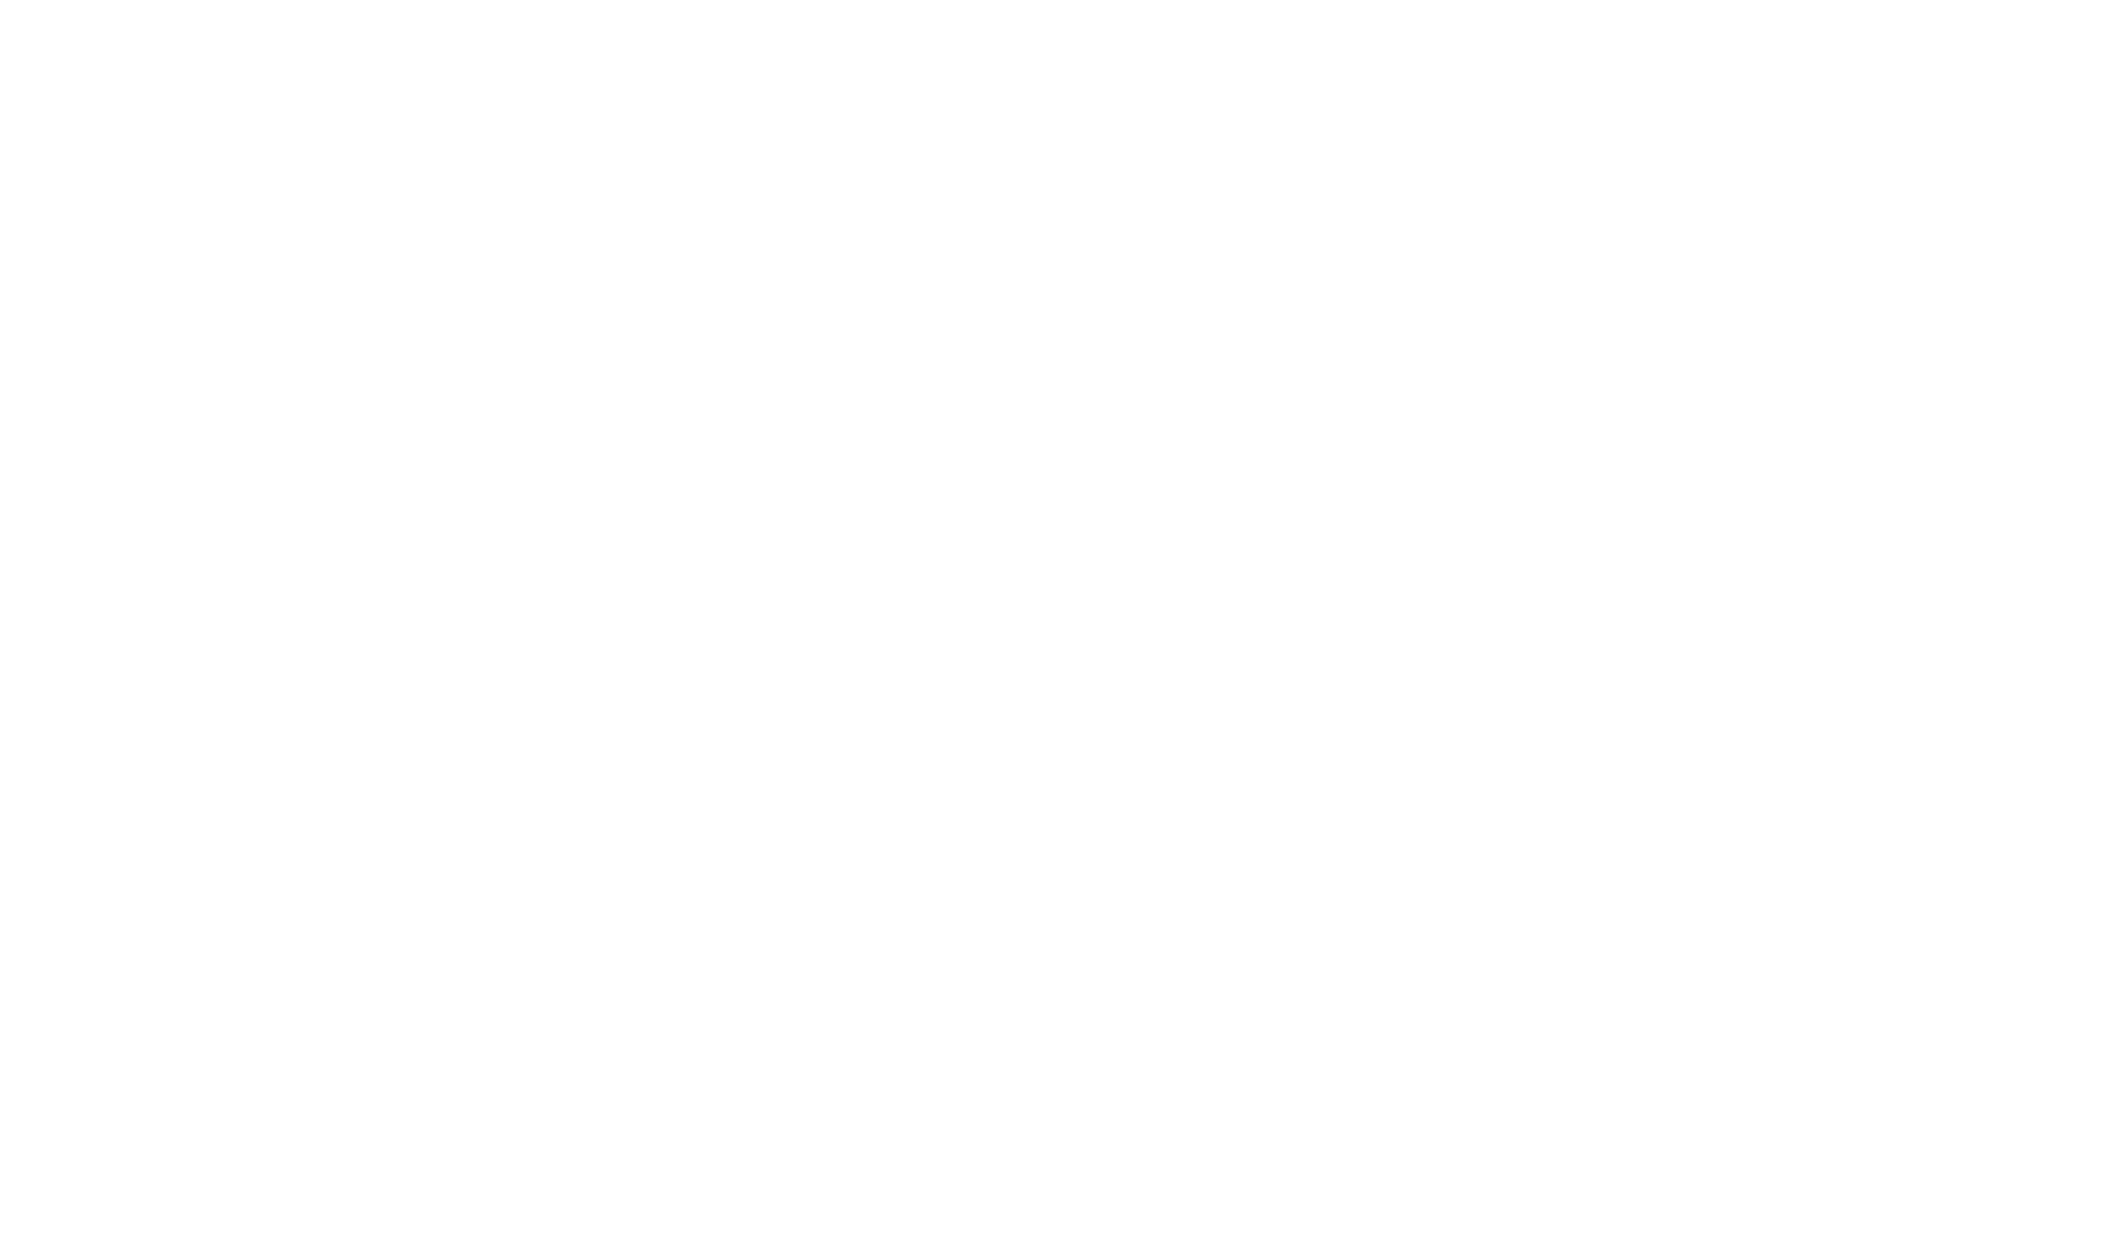 Seo express